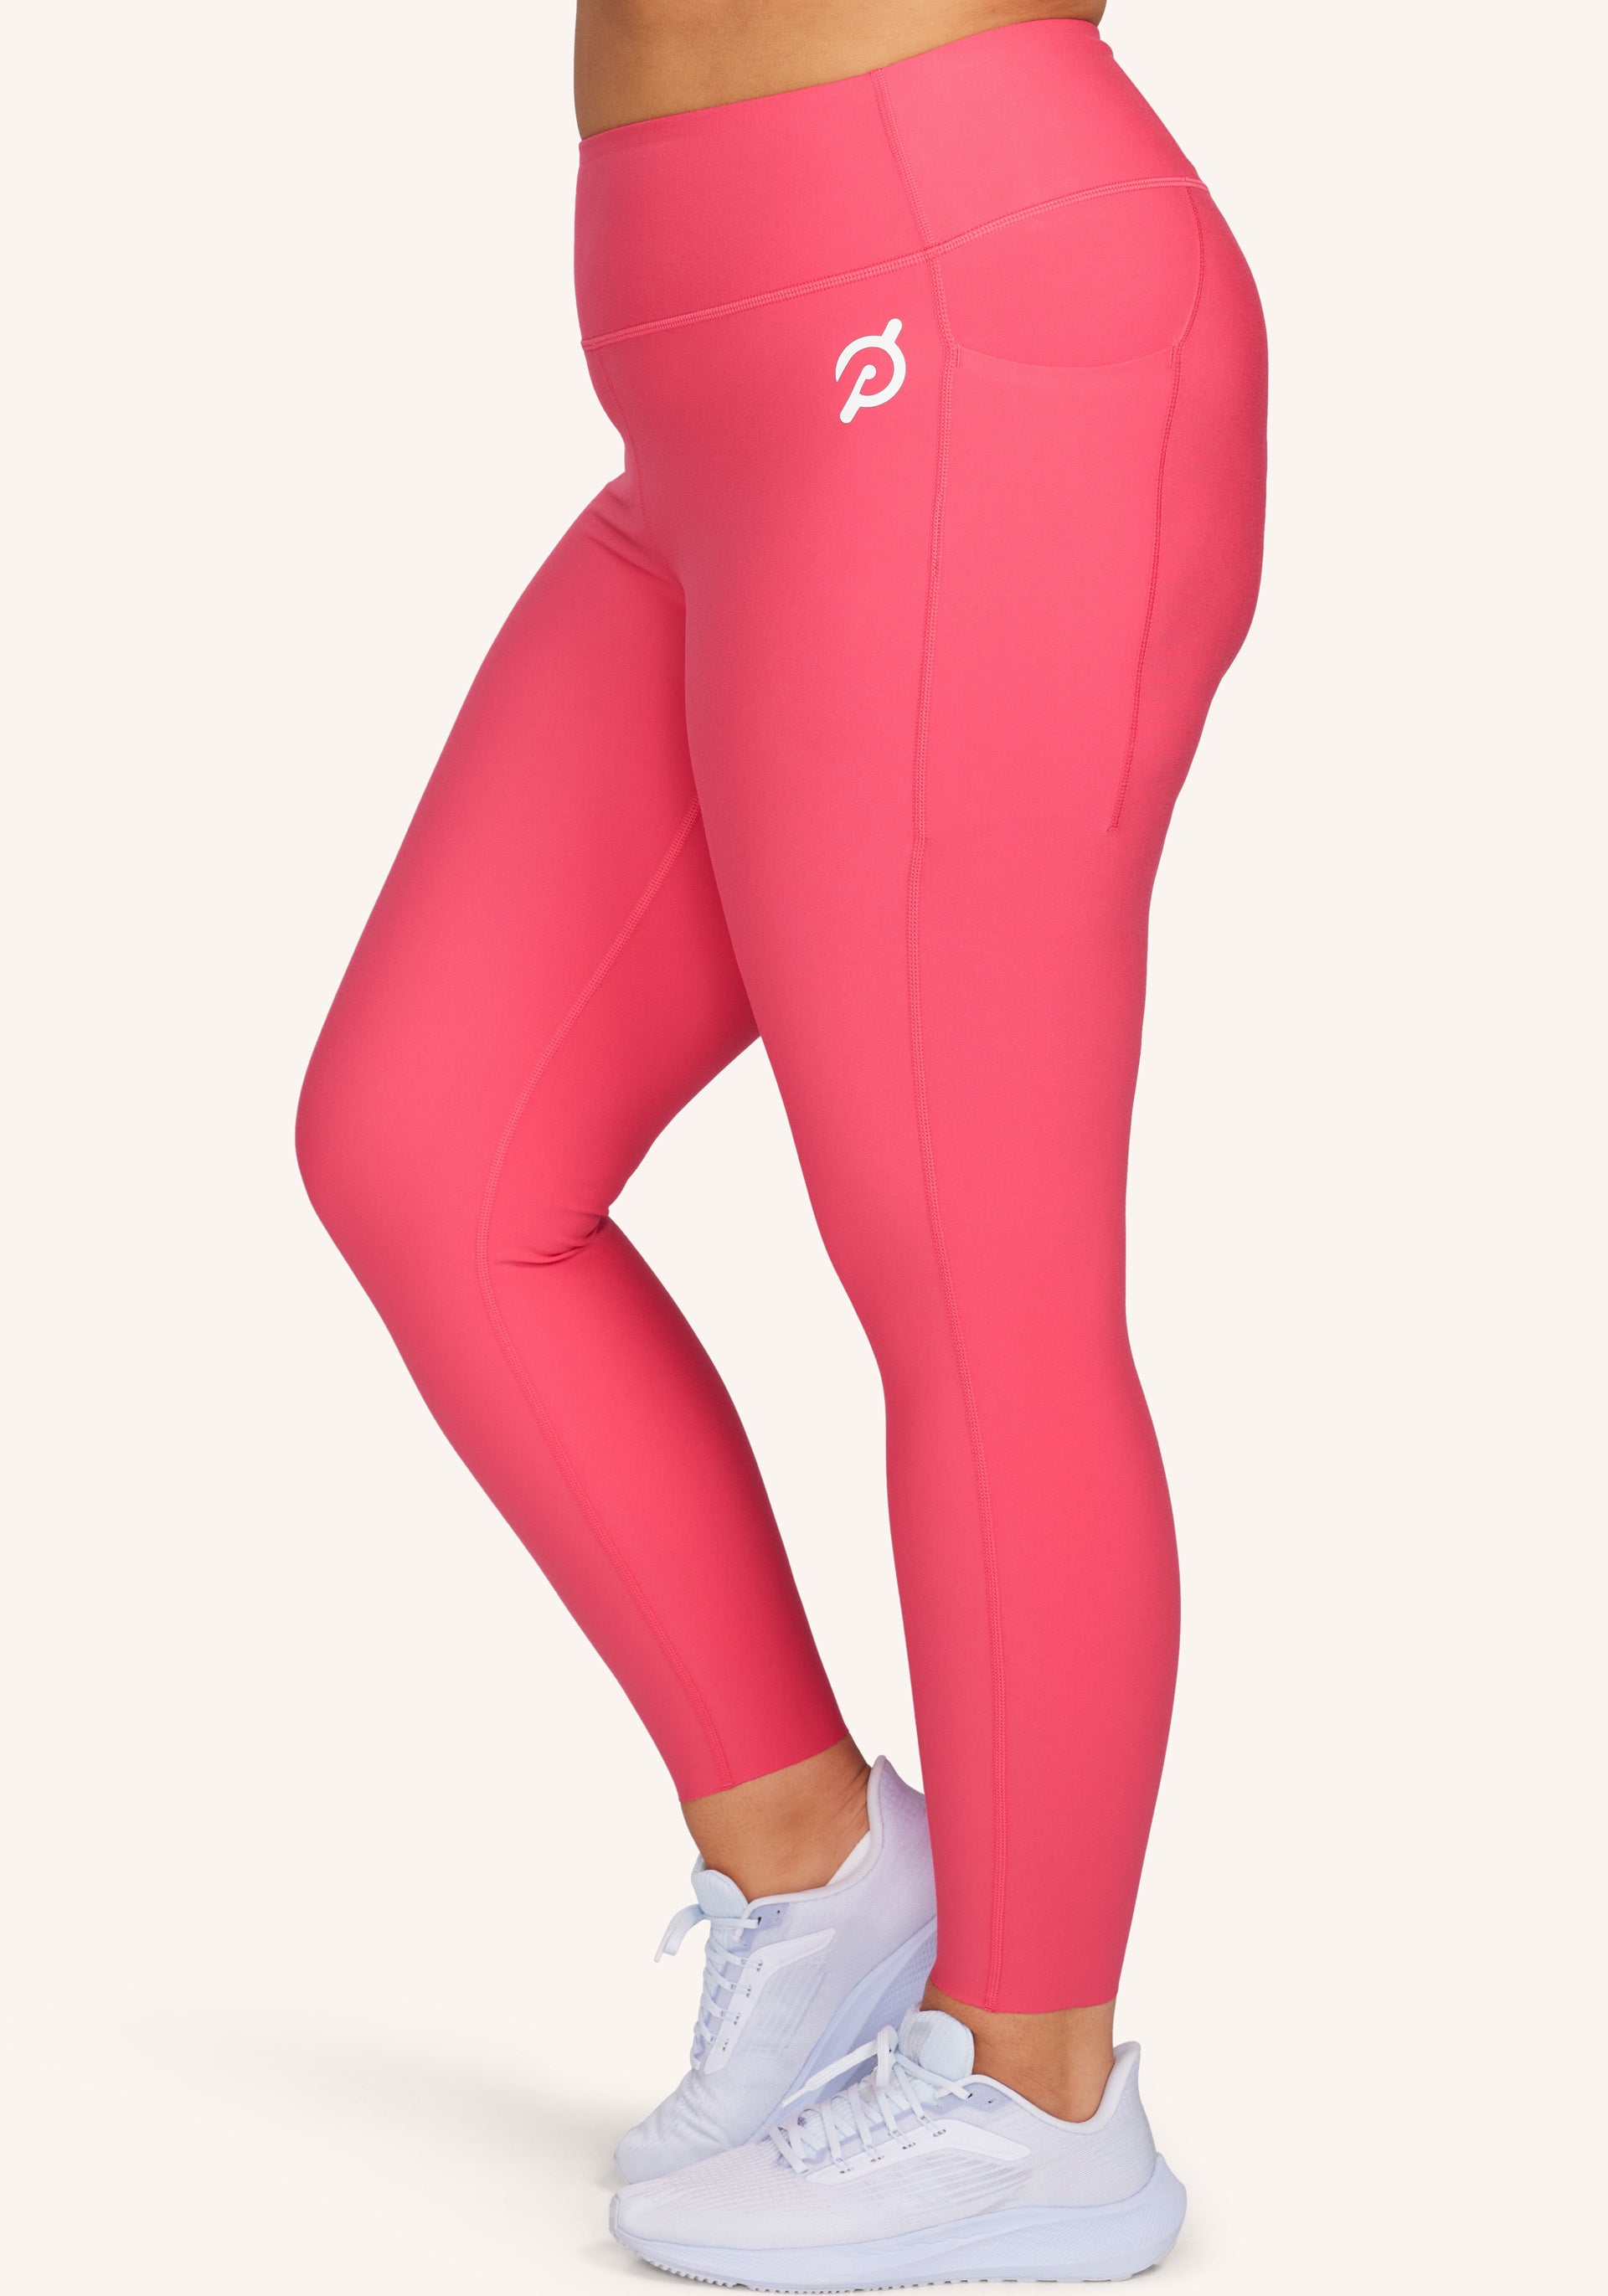 Plus Size Capri Leggings for Women Yoga Bottom Capris Pants High Waisted  Cutout Hem Solid Color Compression Shorts (X-Large, Black) 